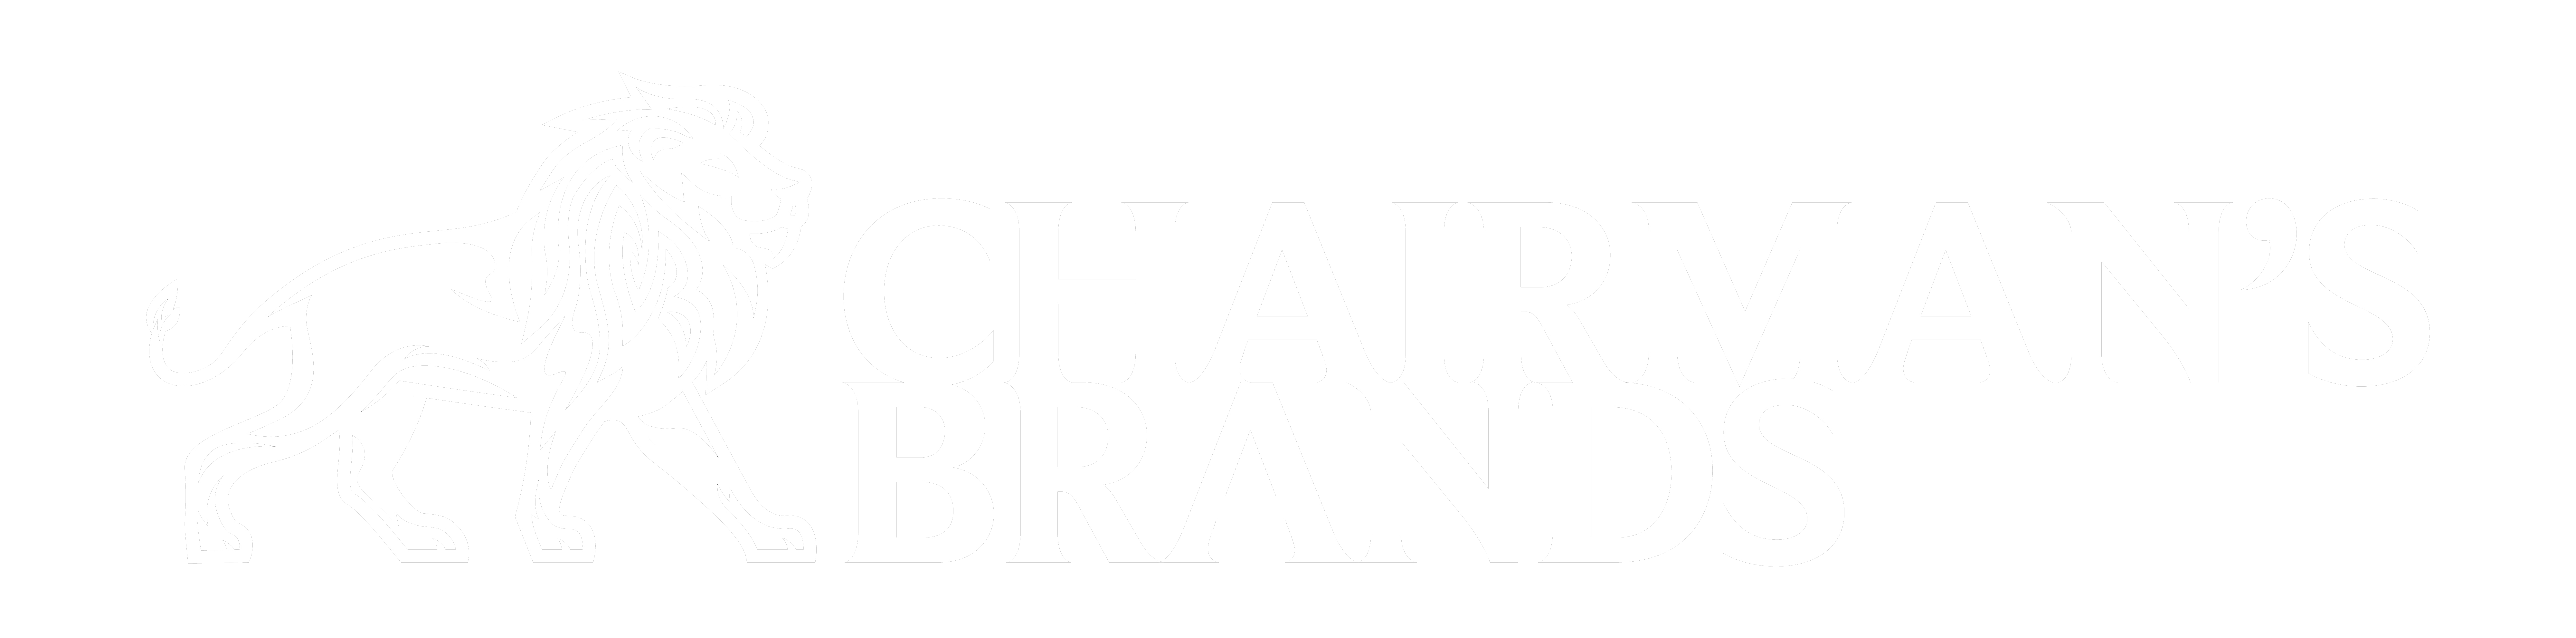 Chairmans Brands